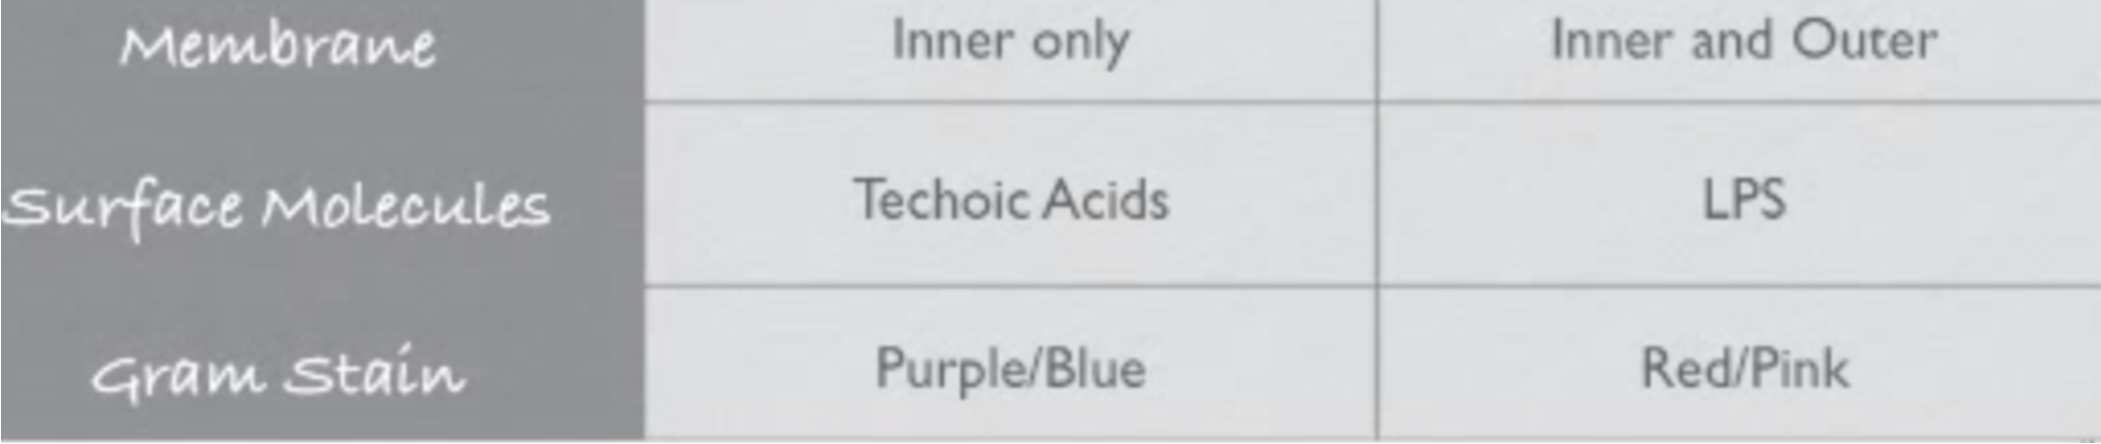 blue/viola interna ed esterna LPS rossa/rosa La parete batterica e